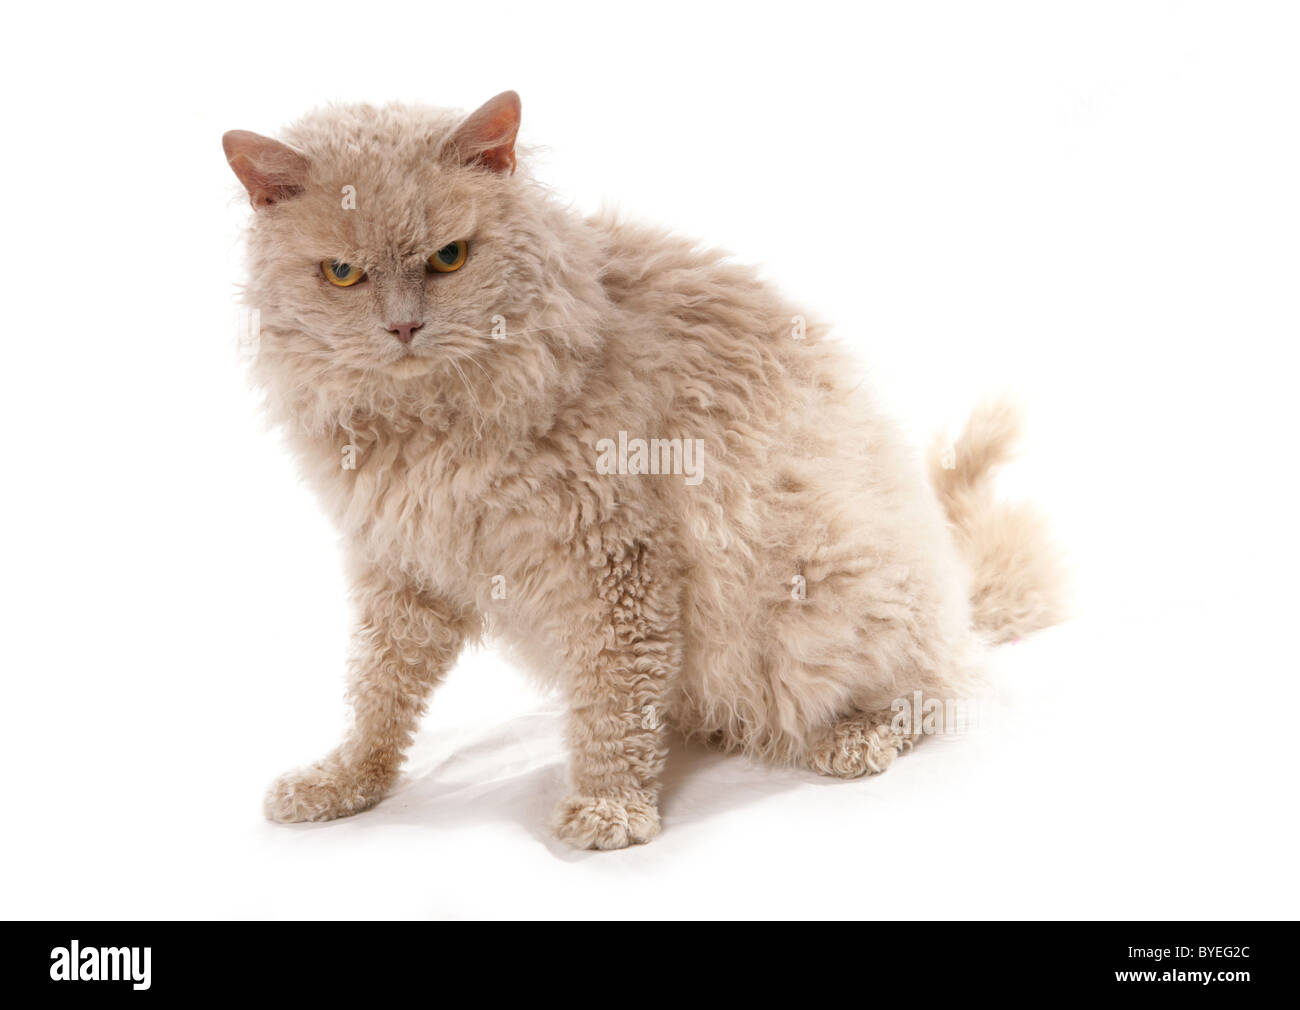 Fawn selkirk rex long hair cat Sitting Studio Stock Photo